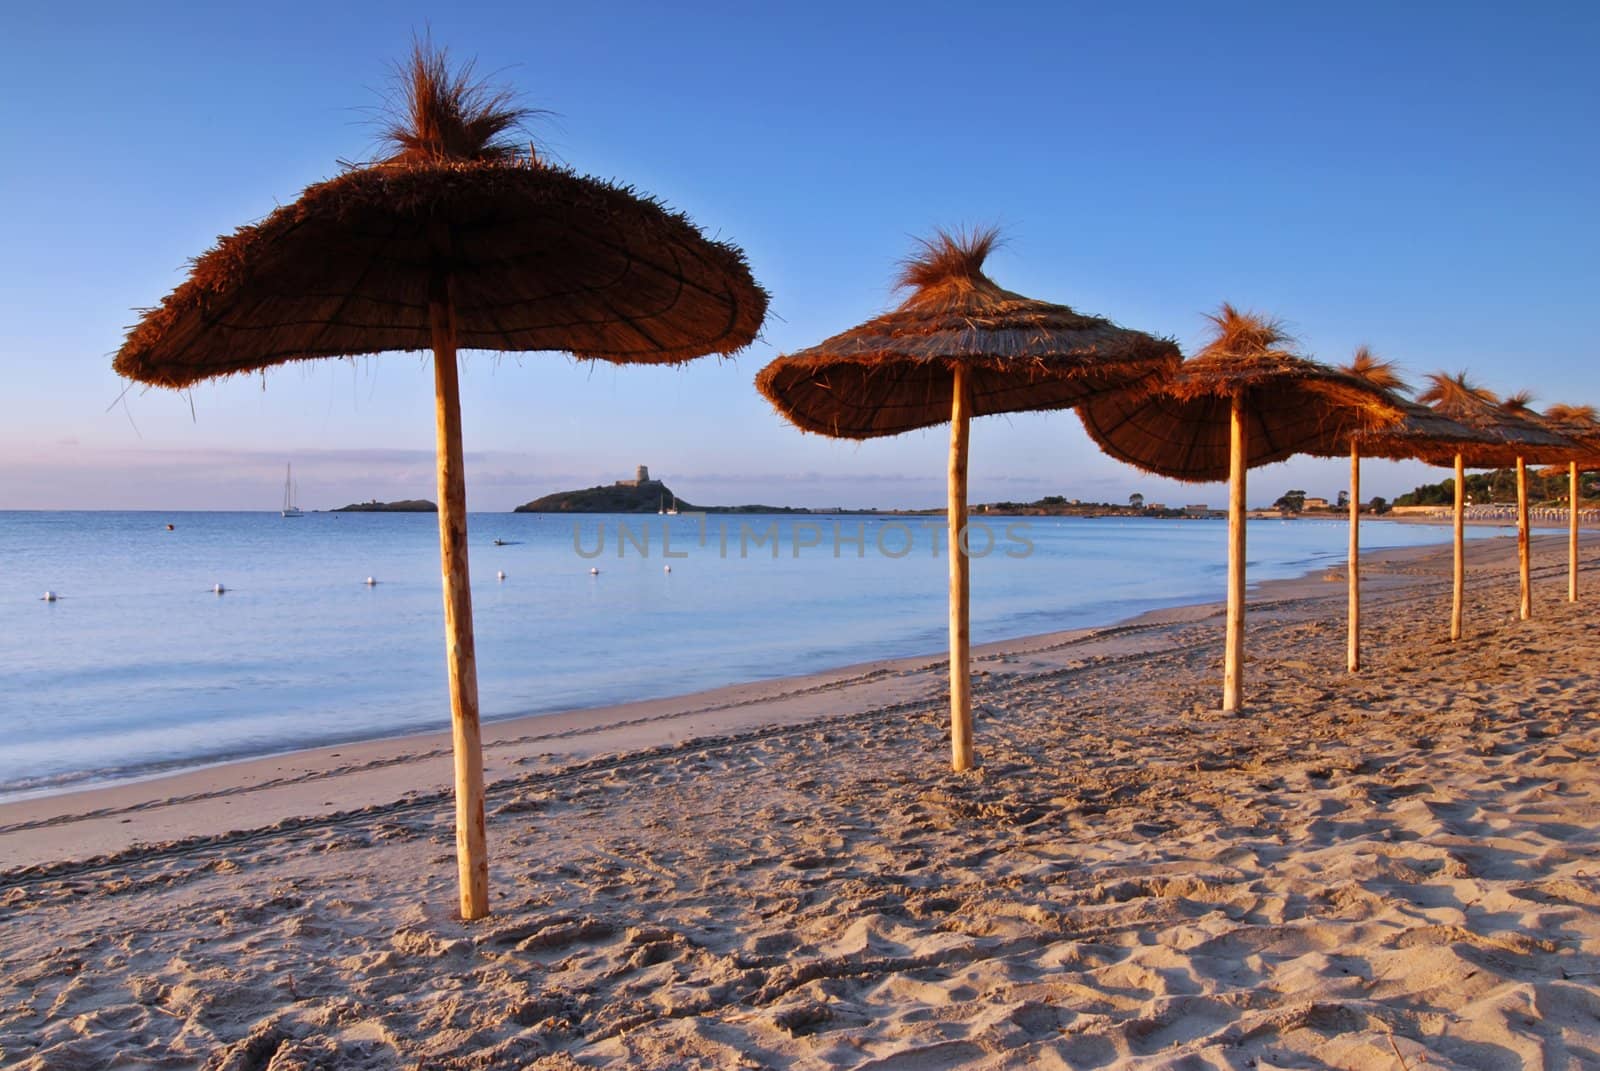 Ubrellas on the empty beach early morning